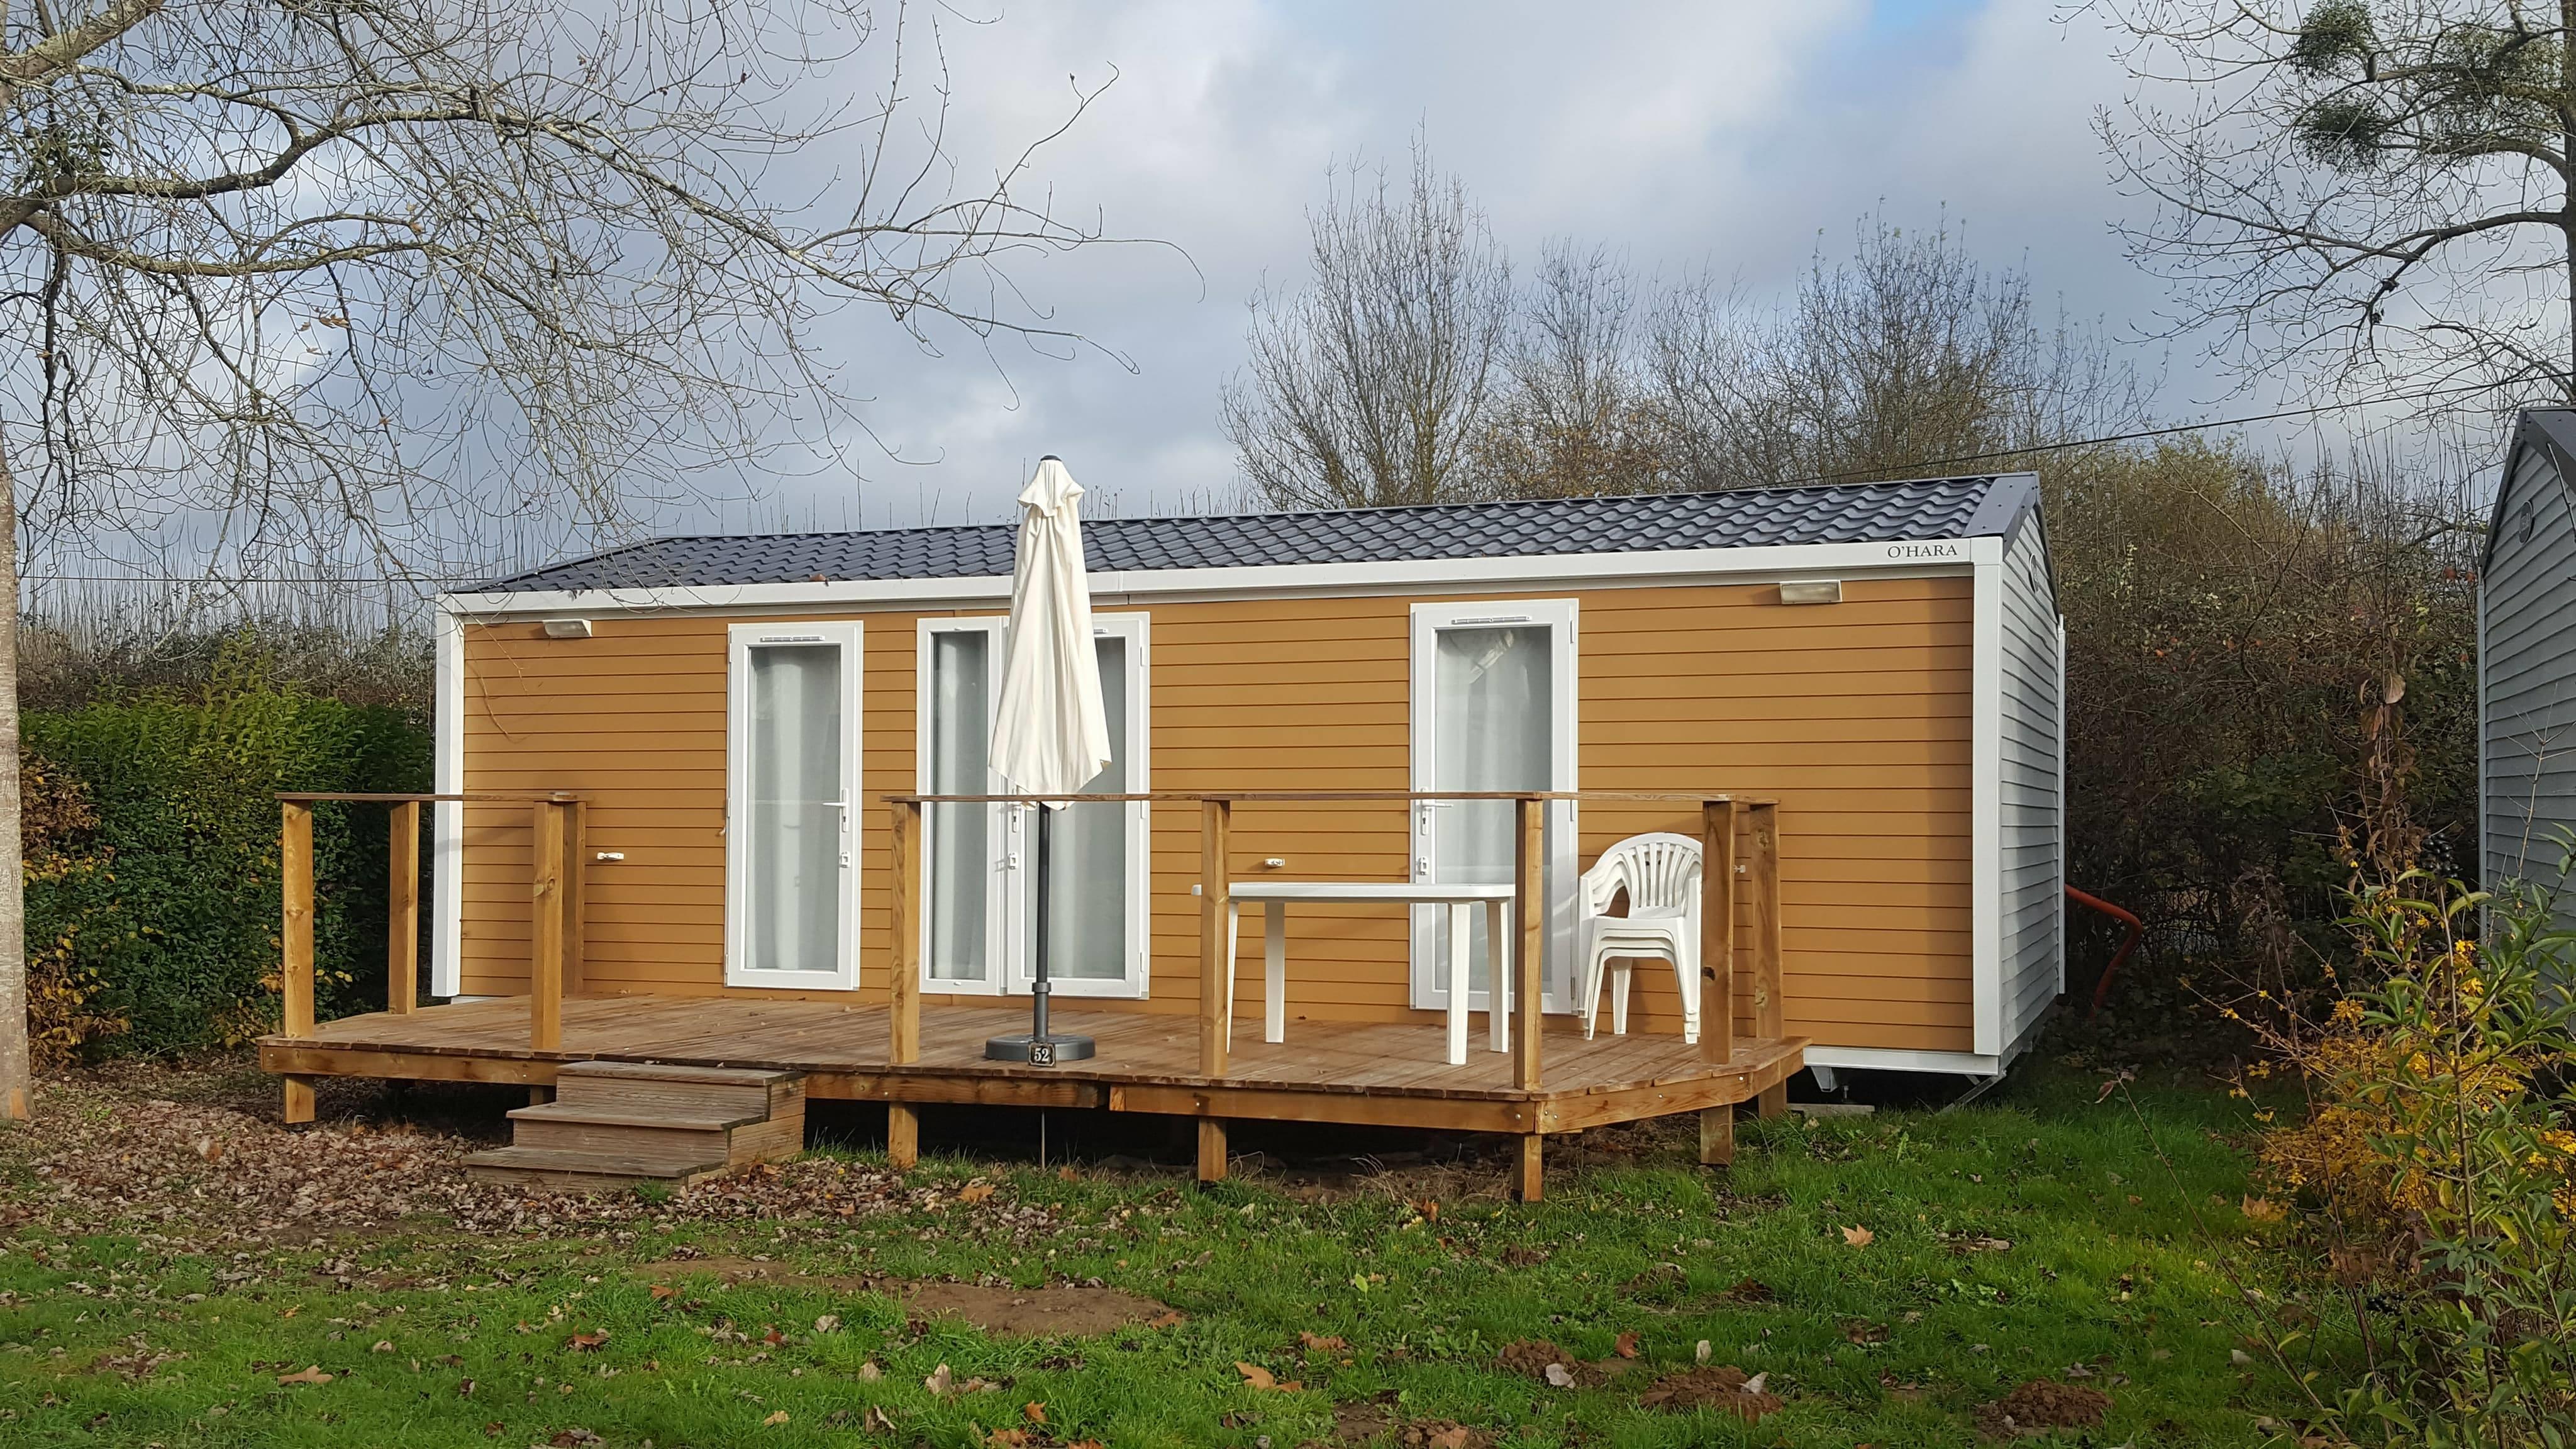 Accommodation - Cottage Hotelier - 2 Bedrooms With 2 Bathrooms - Camping Seasonova Les Plages de Loire